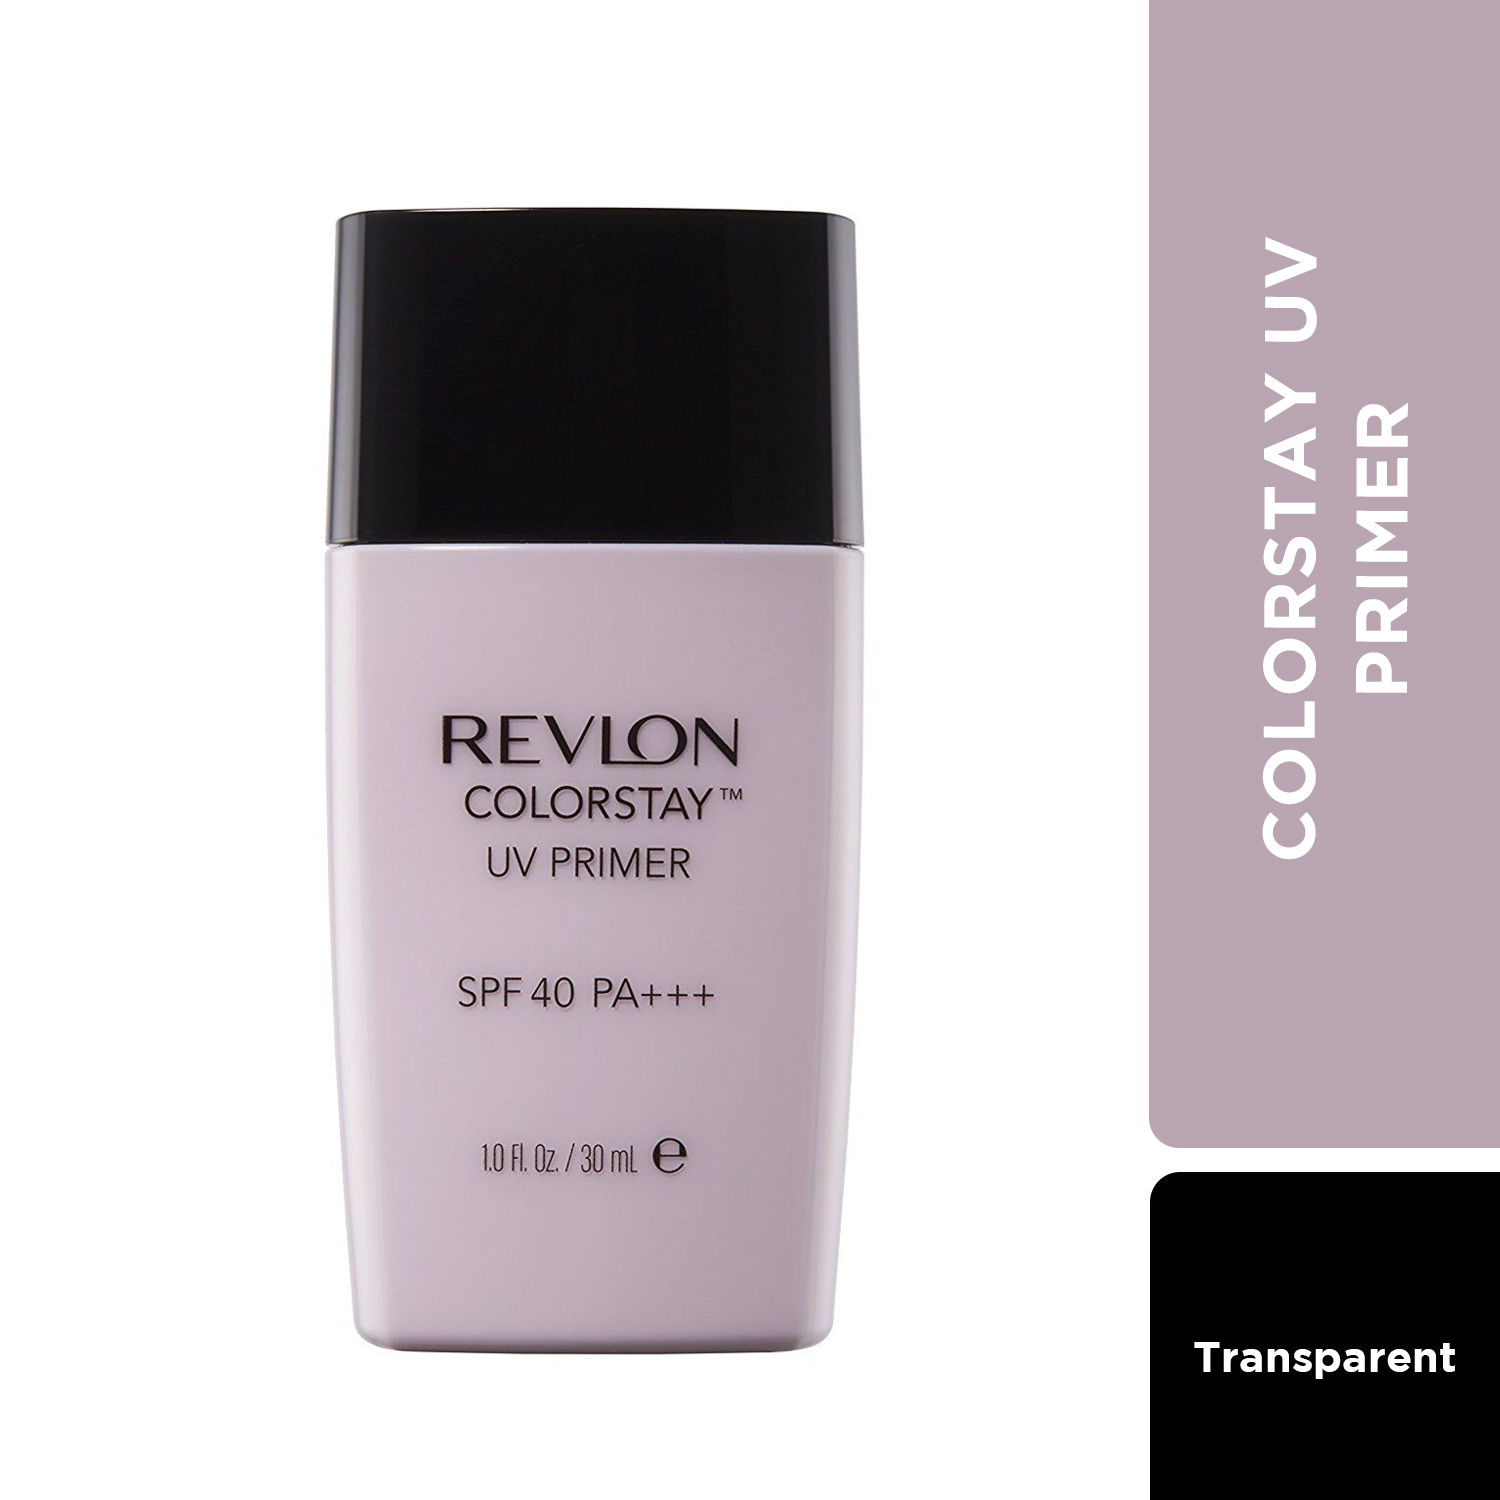 Revlon Colorstay Uv Primer SPF 40 PA+++